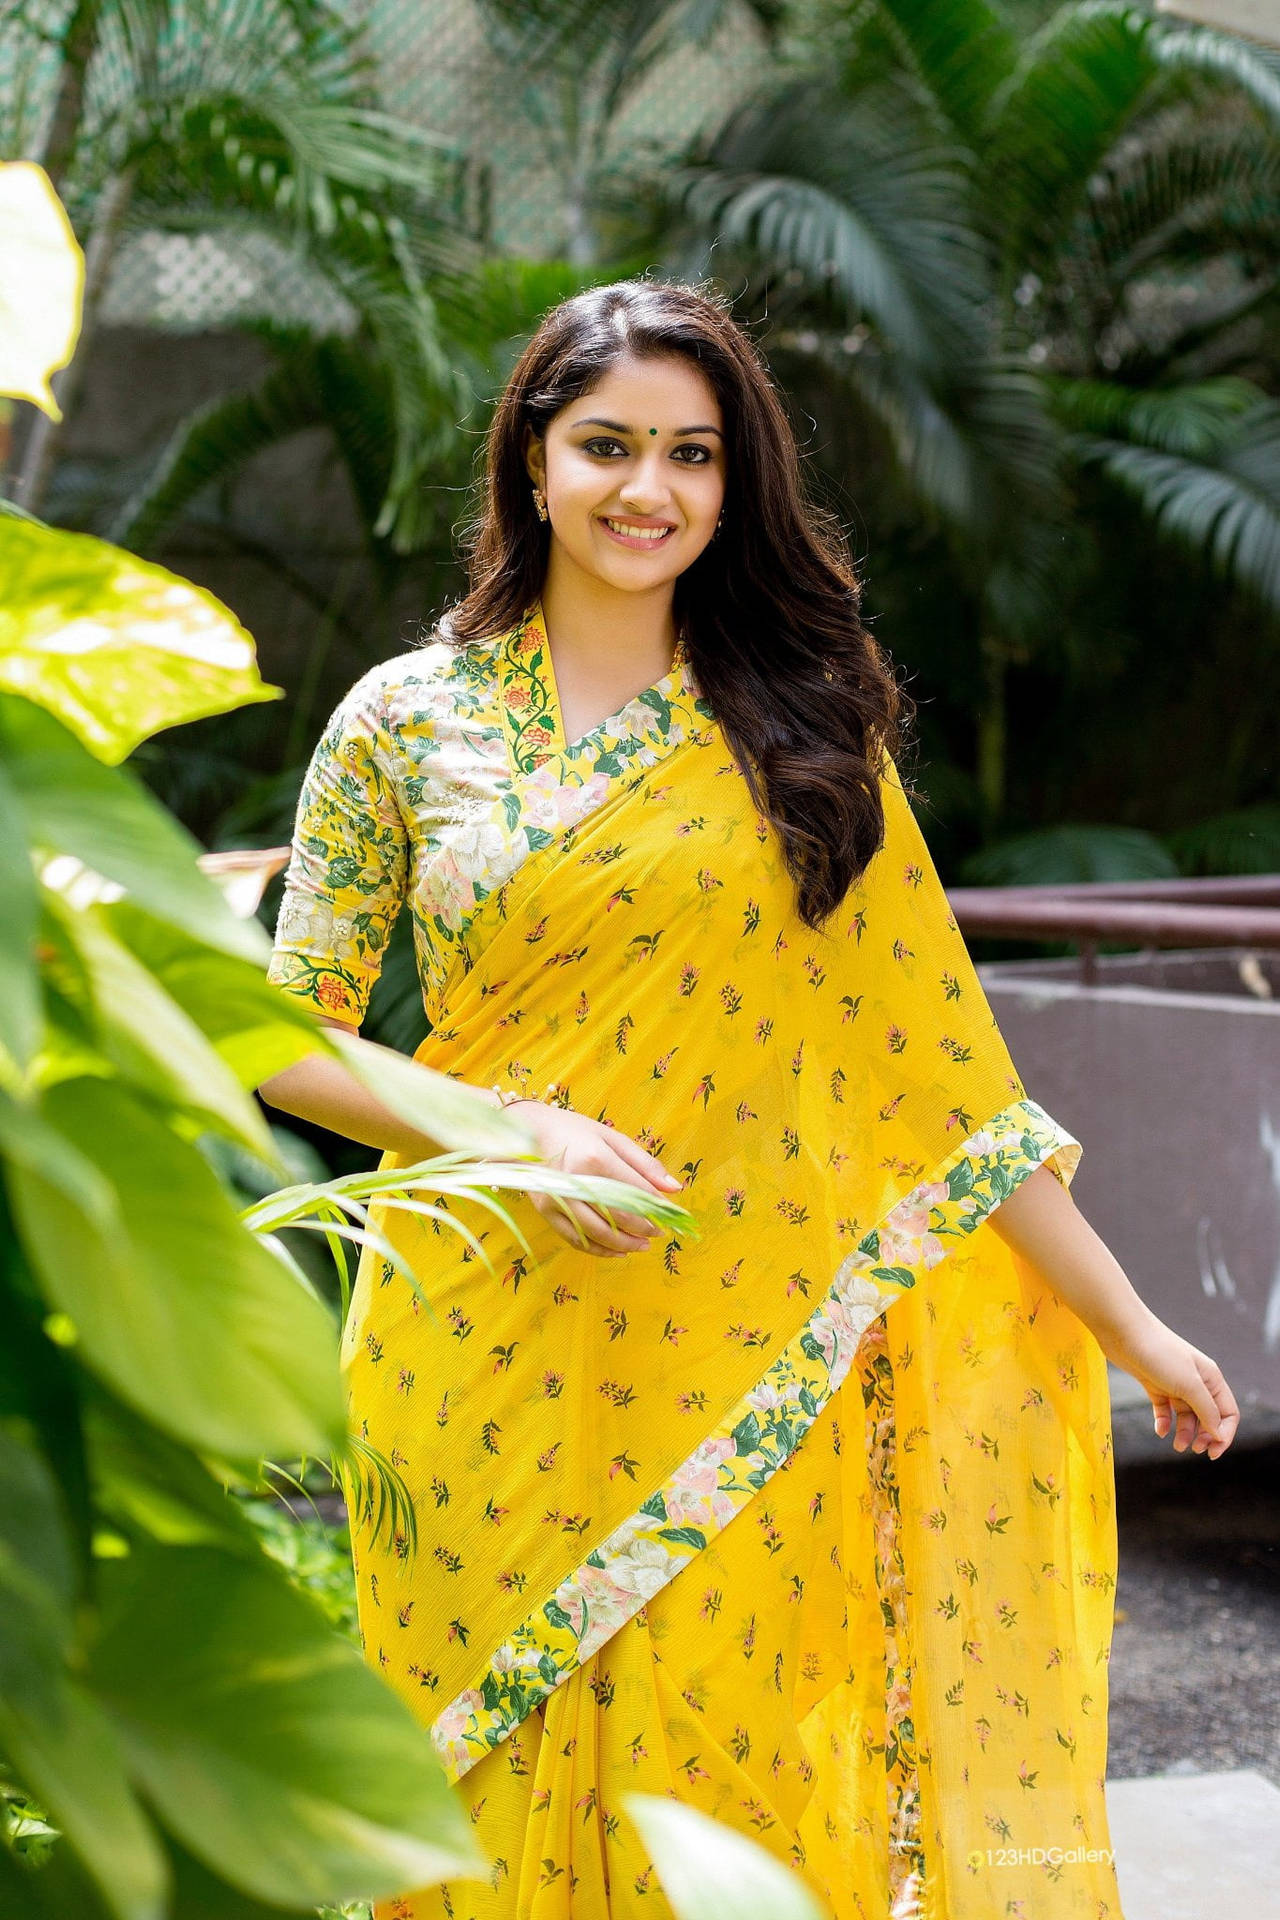 Captivating Keerthi Suresh in Yellow Floral Dress Wallpaper